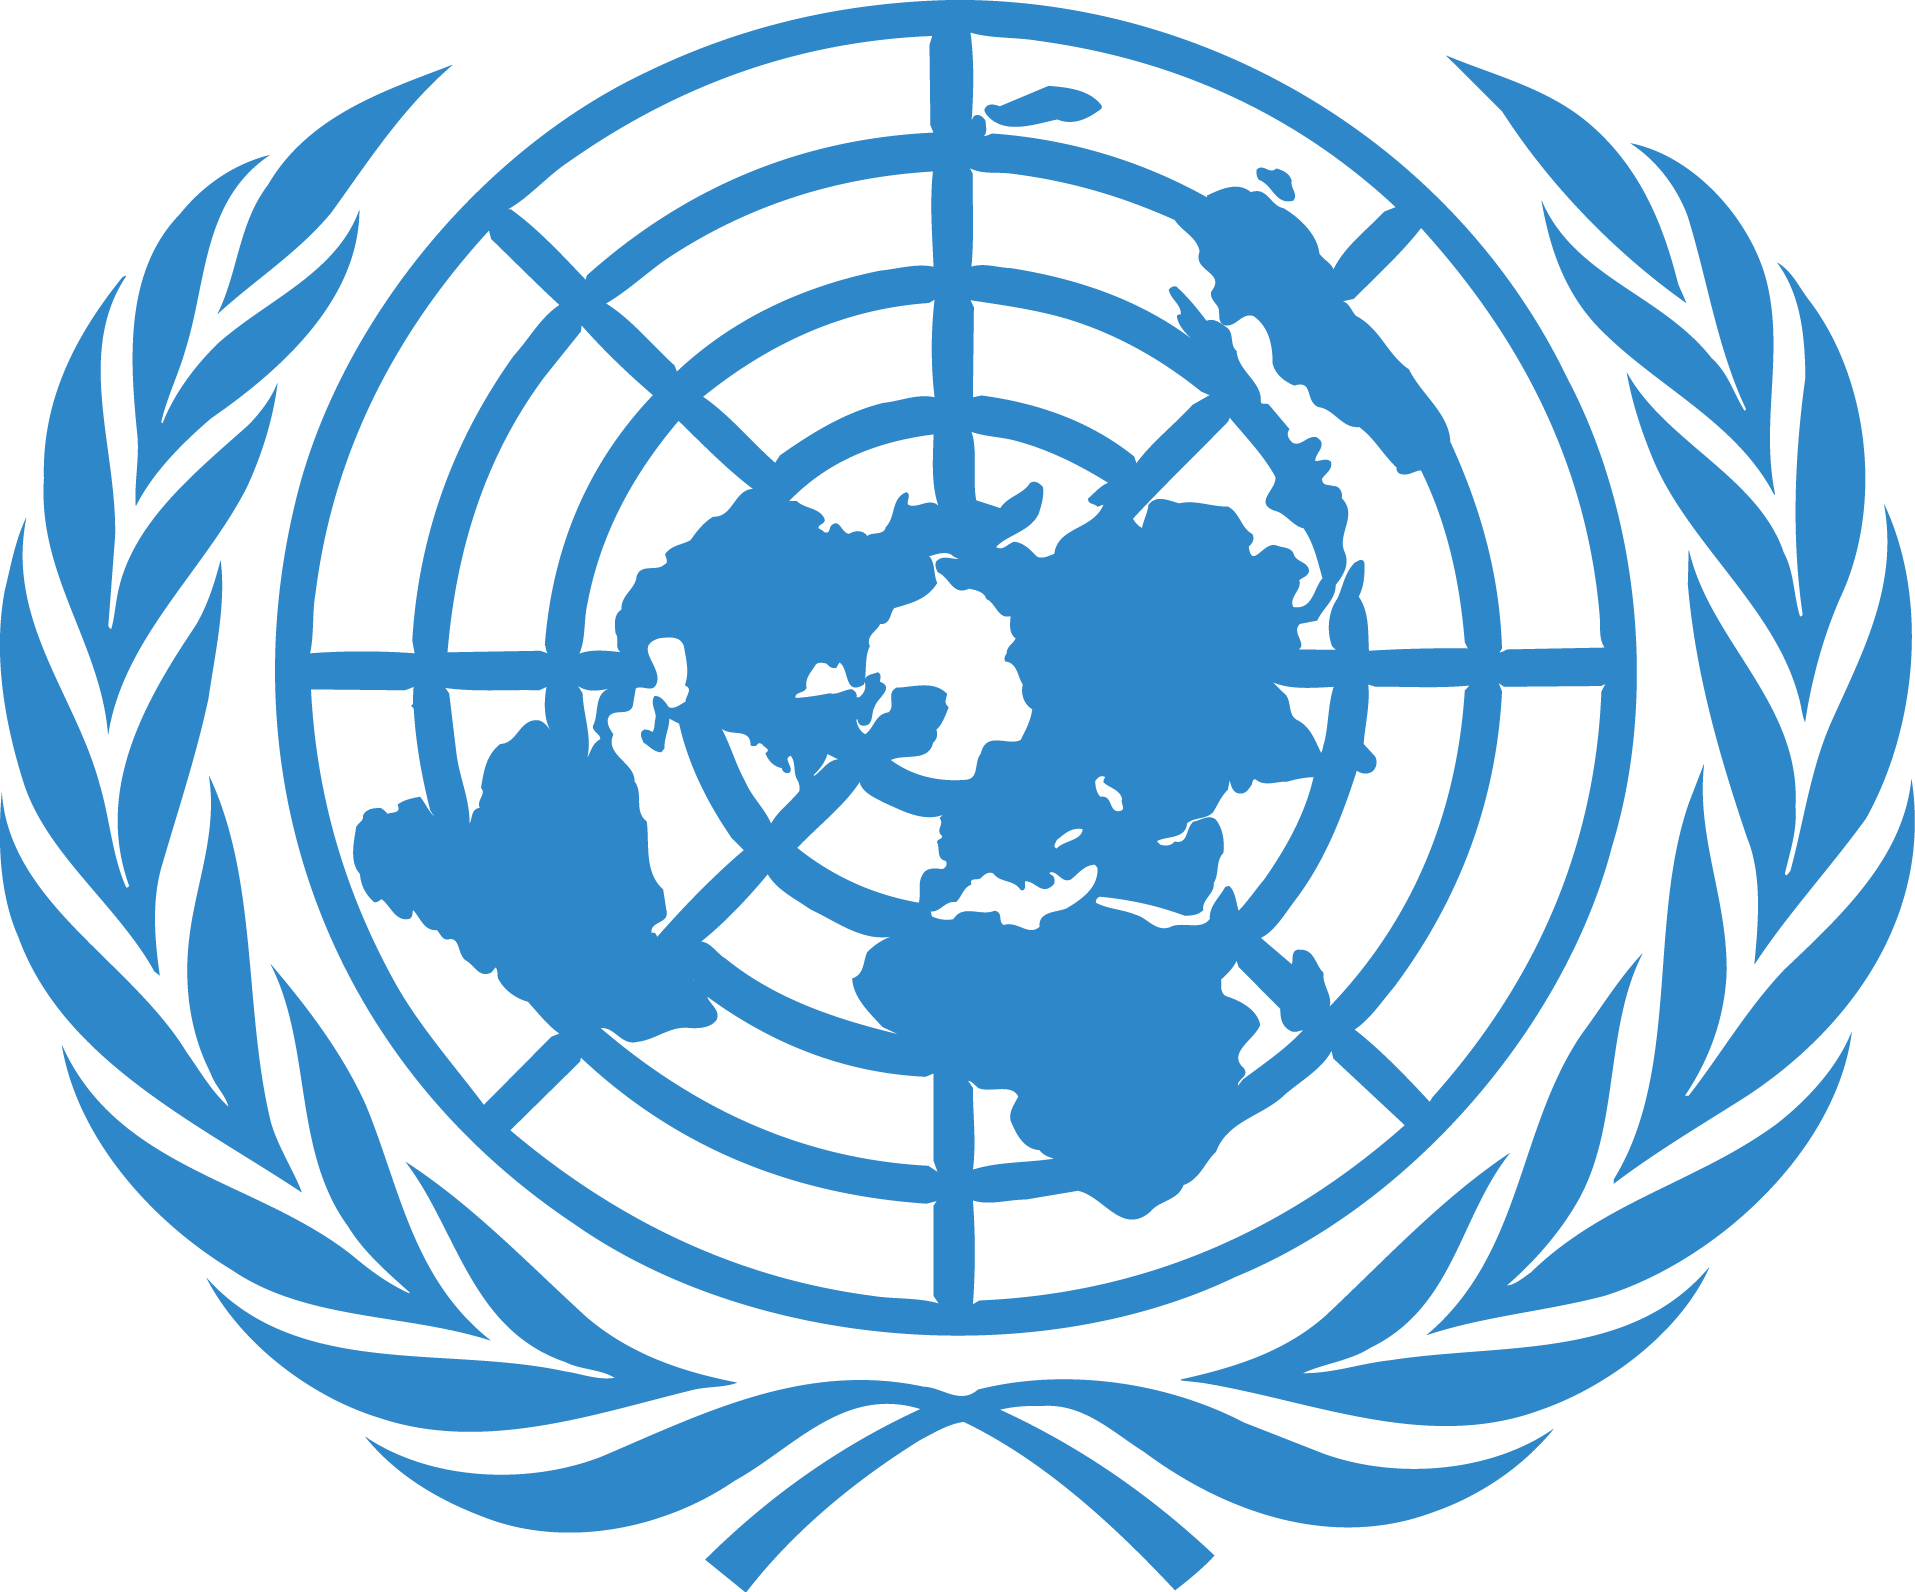 Центр оон. Флаг организации Объединенных наций. Символика ООН. Совет безопасности ООН эмблема. Логотип ООН United Nations.